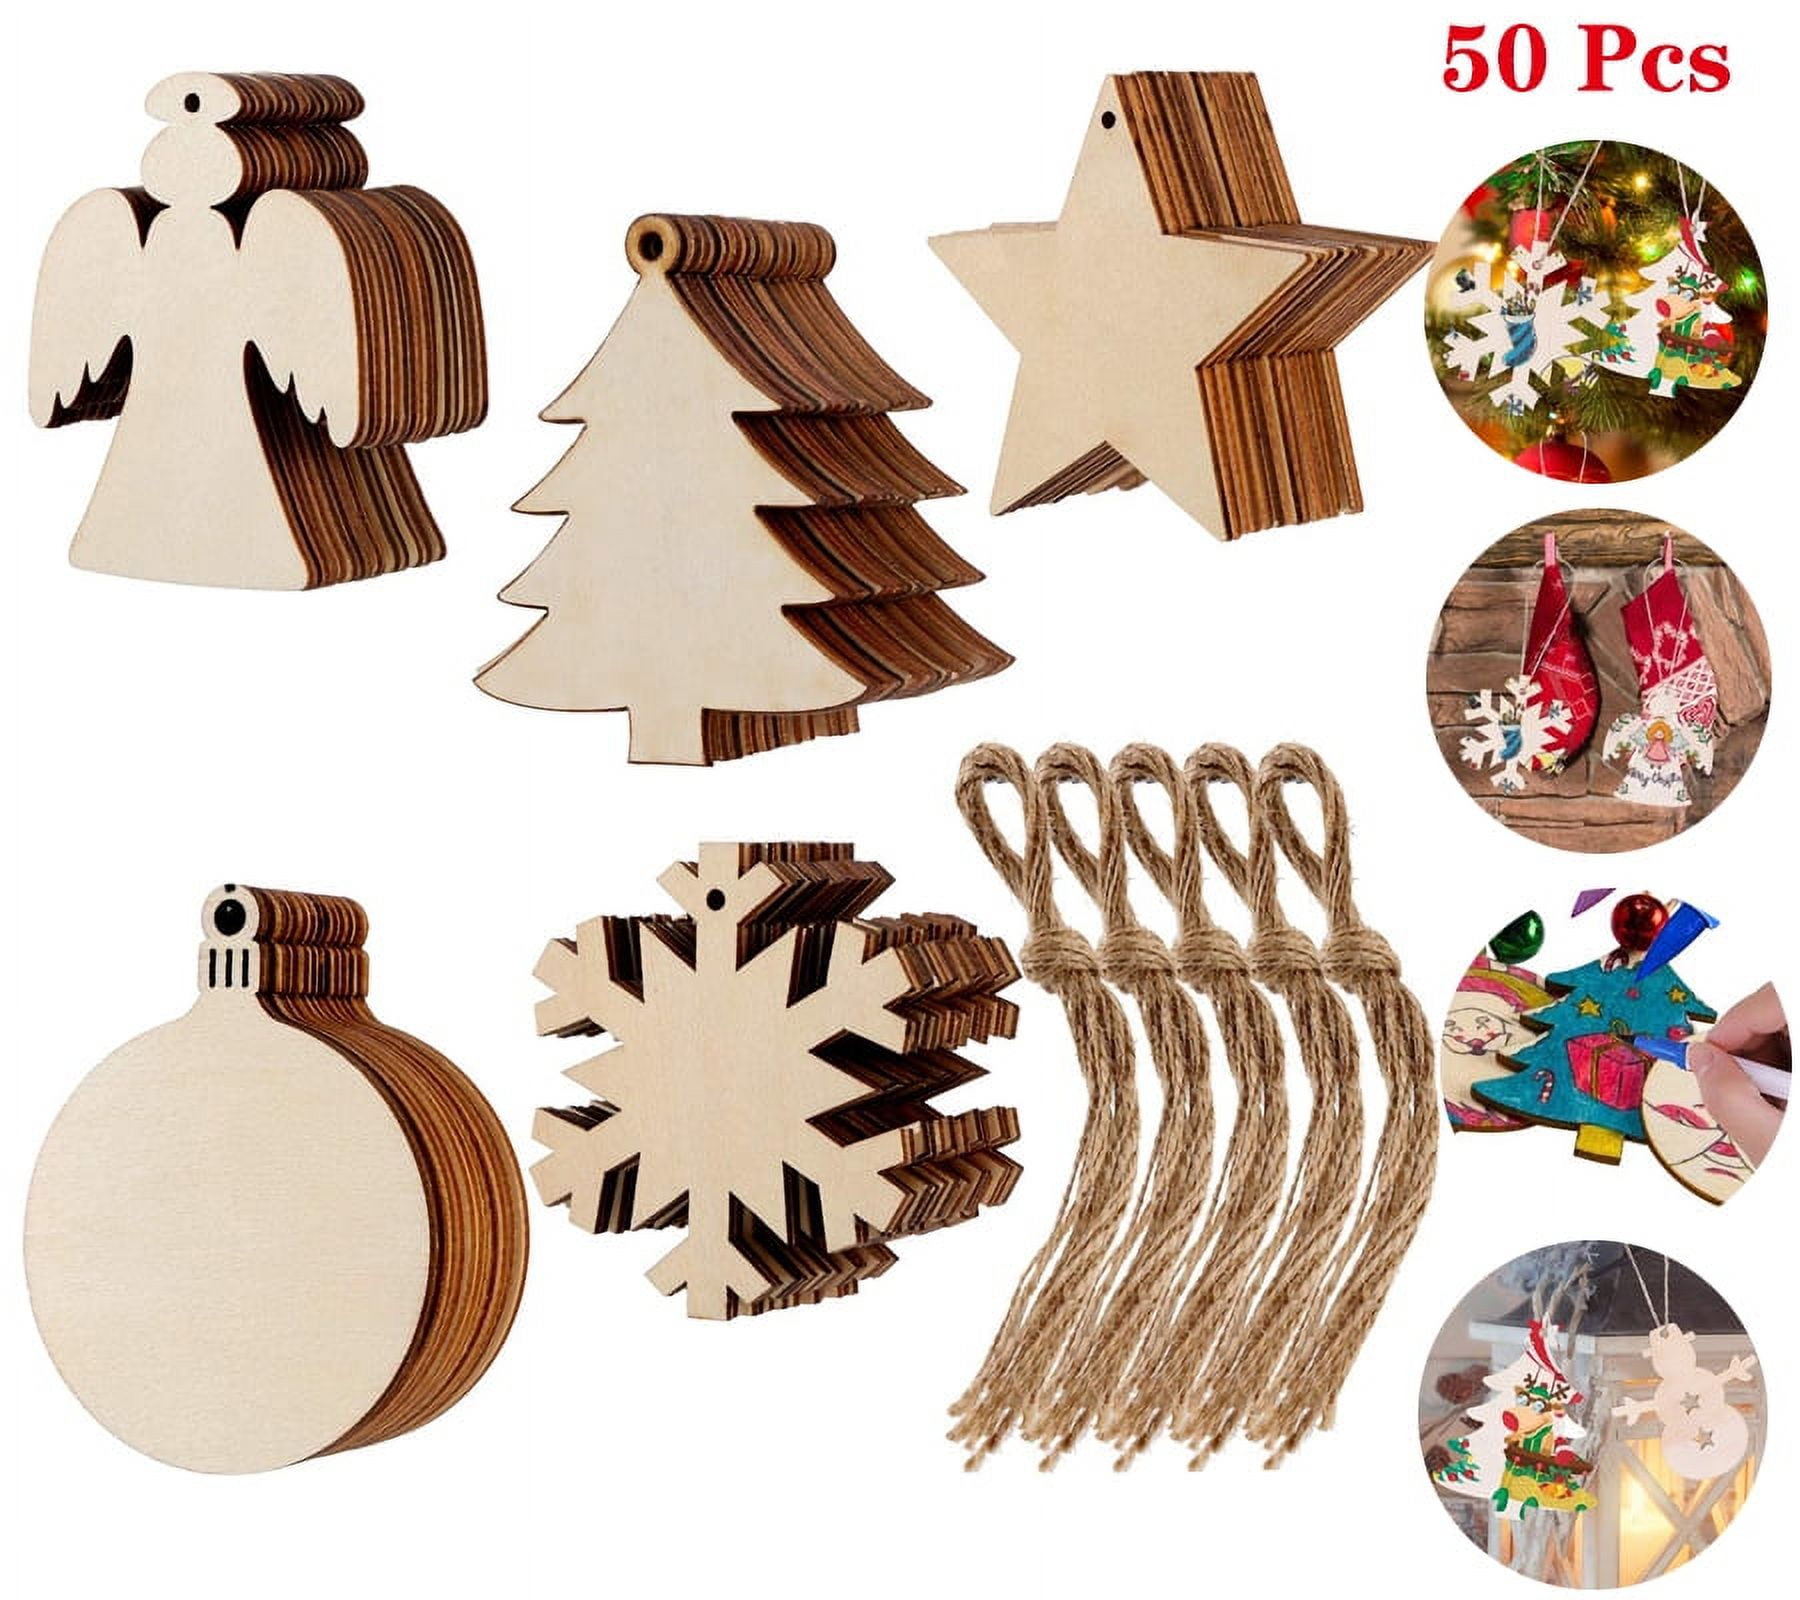 900+ Best Wood Crafts ideas  wood crafts, crafts, holiday crafts